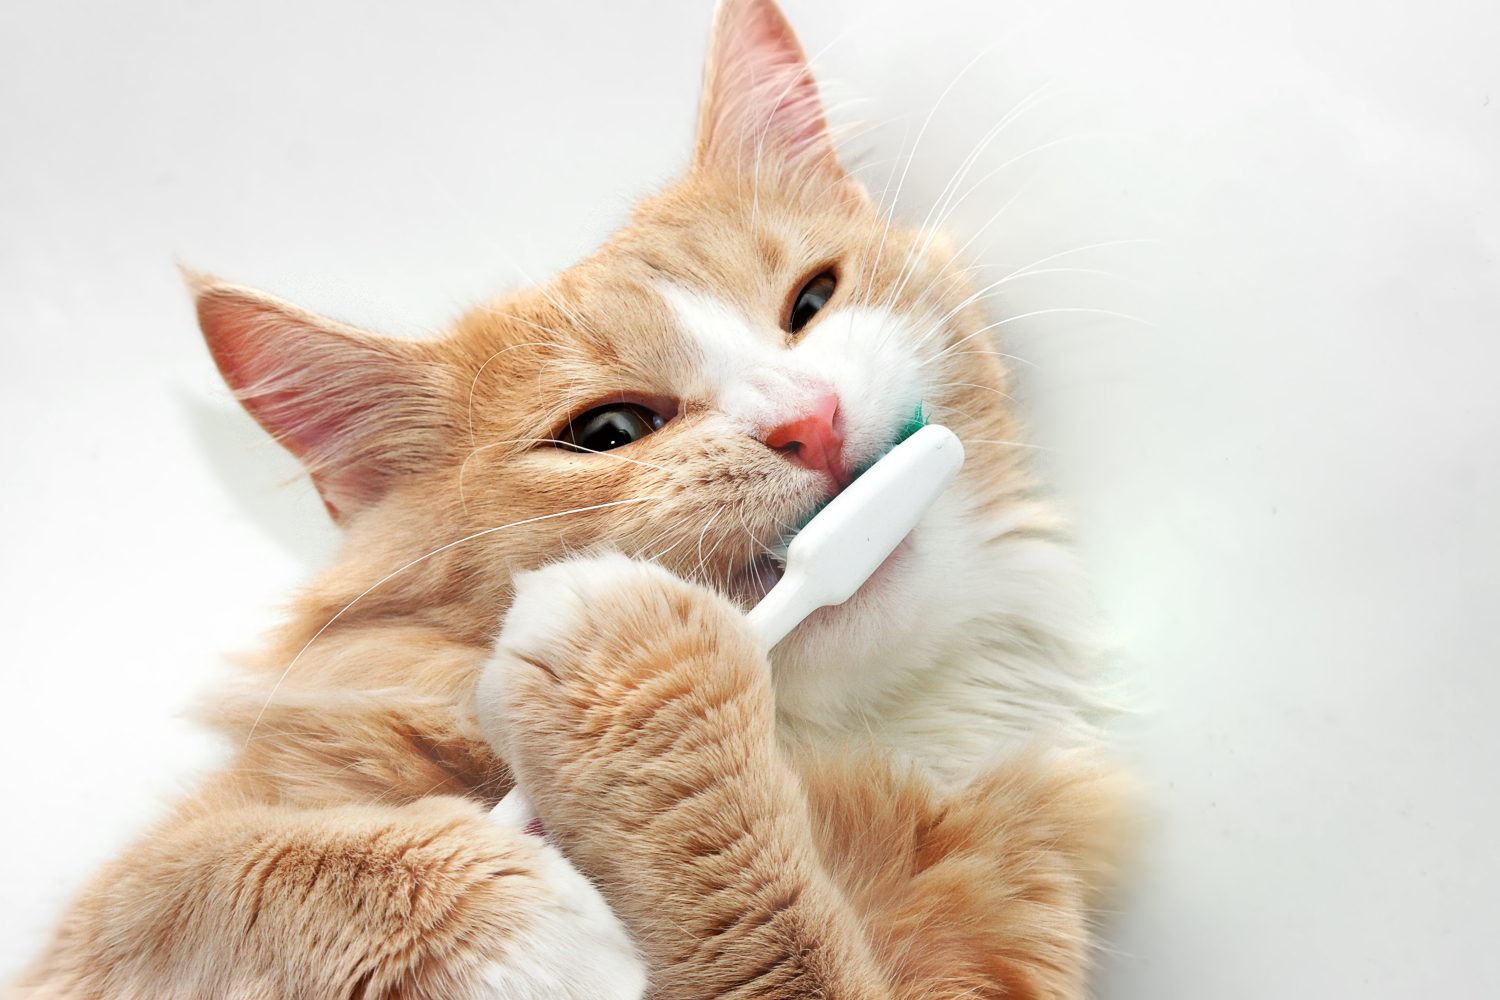 cat brushing its own teeth